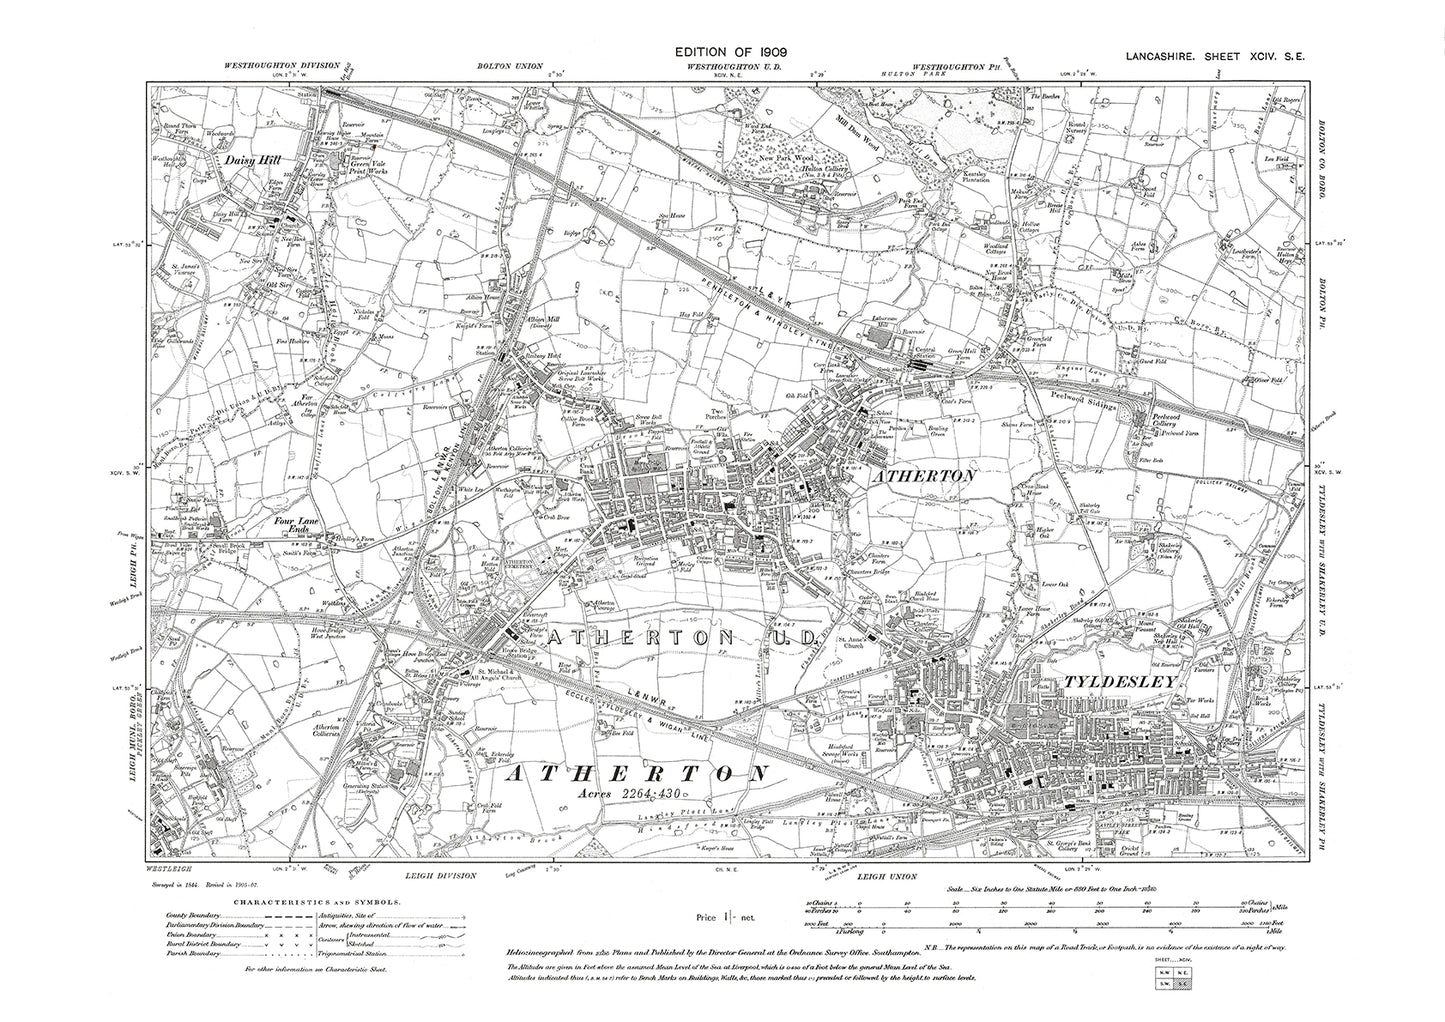 Atherton, Tyldesley - Lancashire in 1909 : 94SE